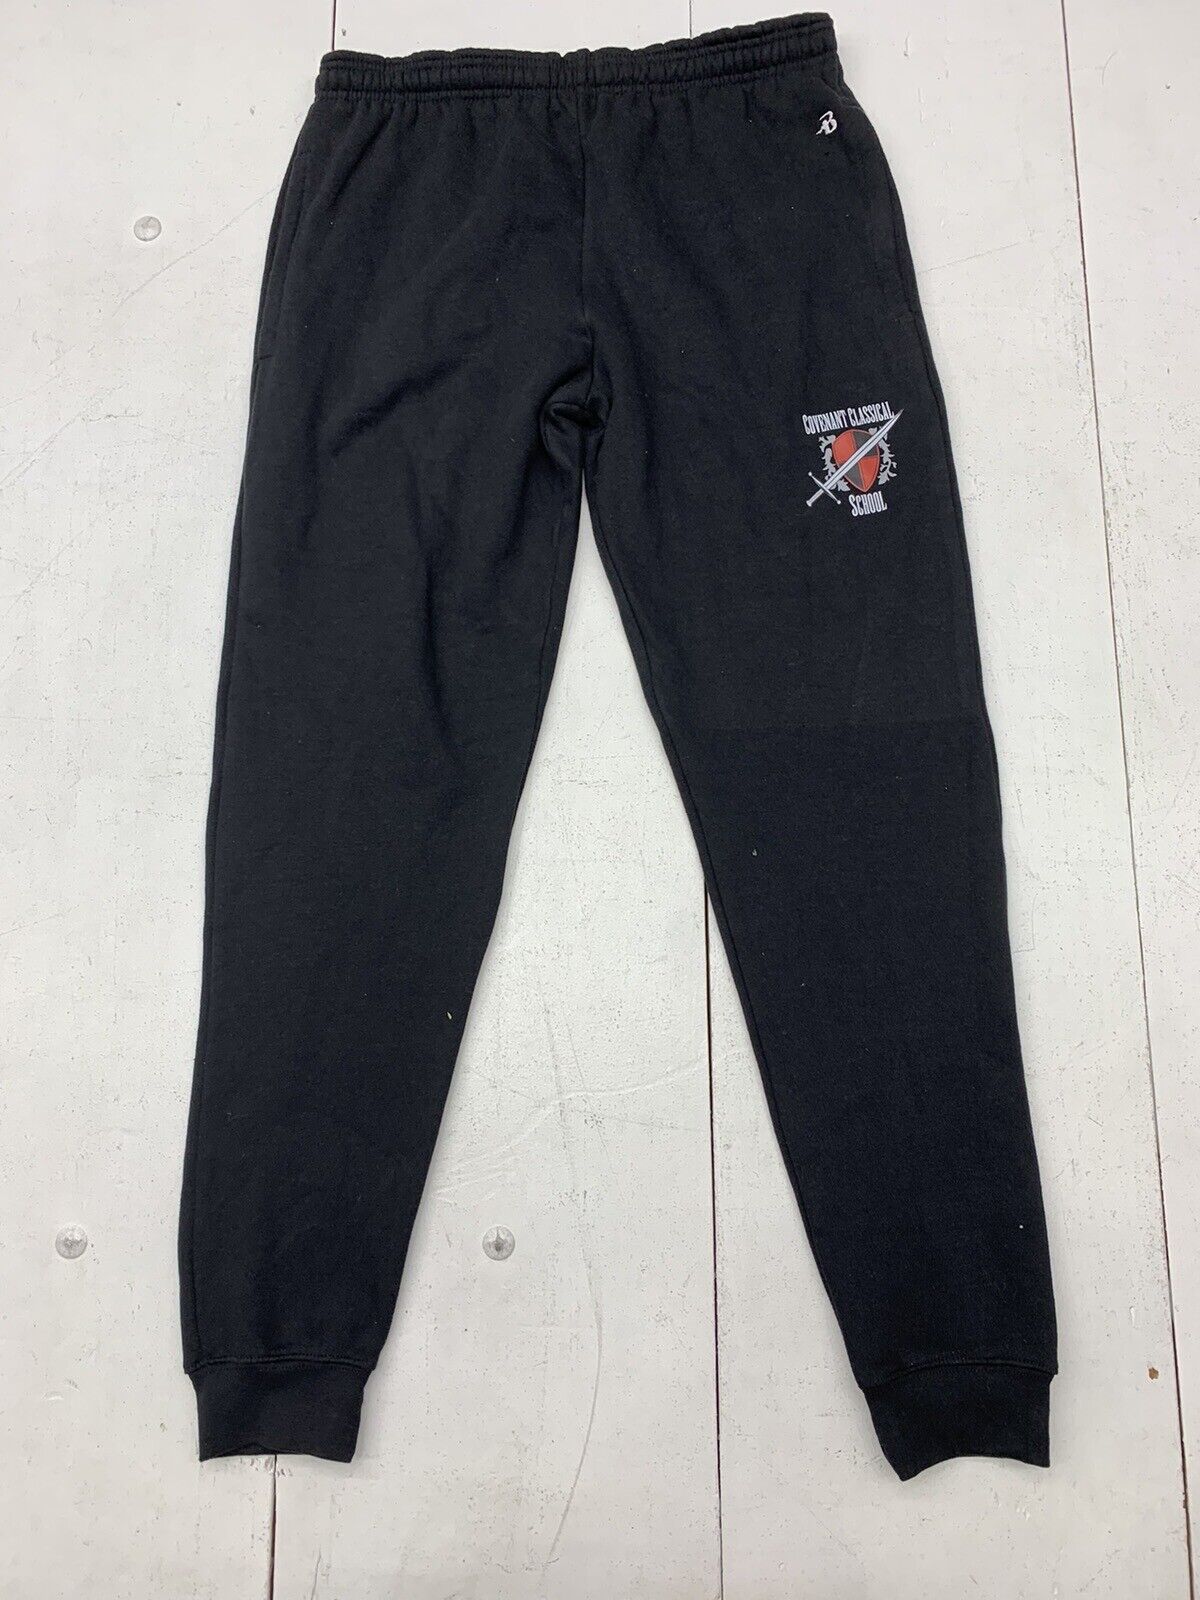 Badger Sport Black Athletic Sweatpants Size Large